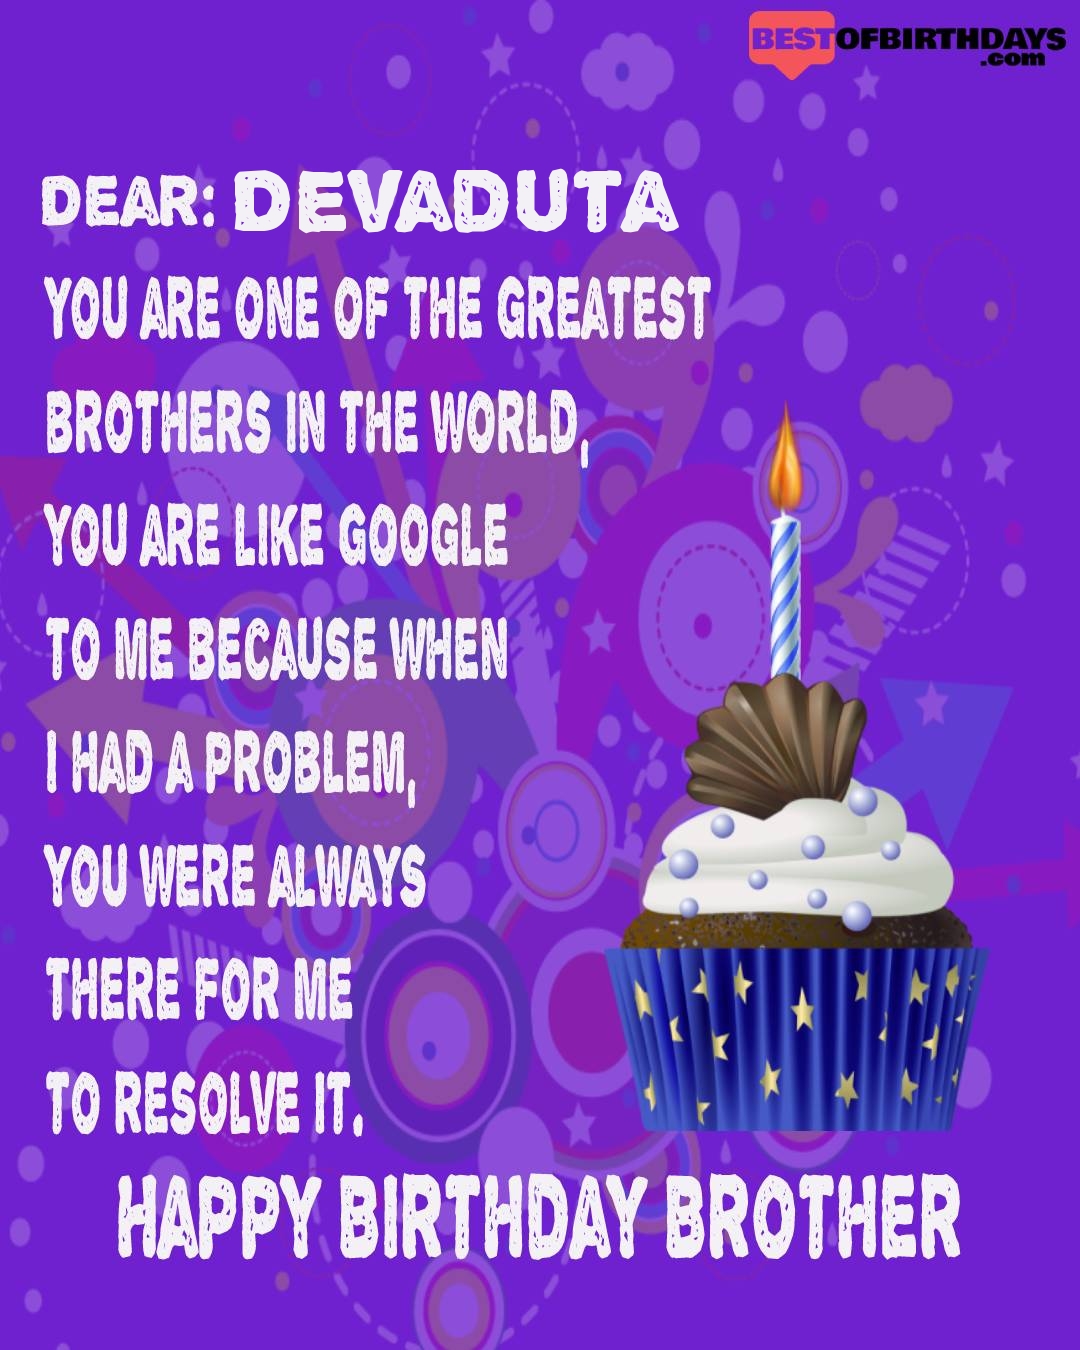 Happy birthday devaduta bhai brother bro